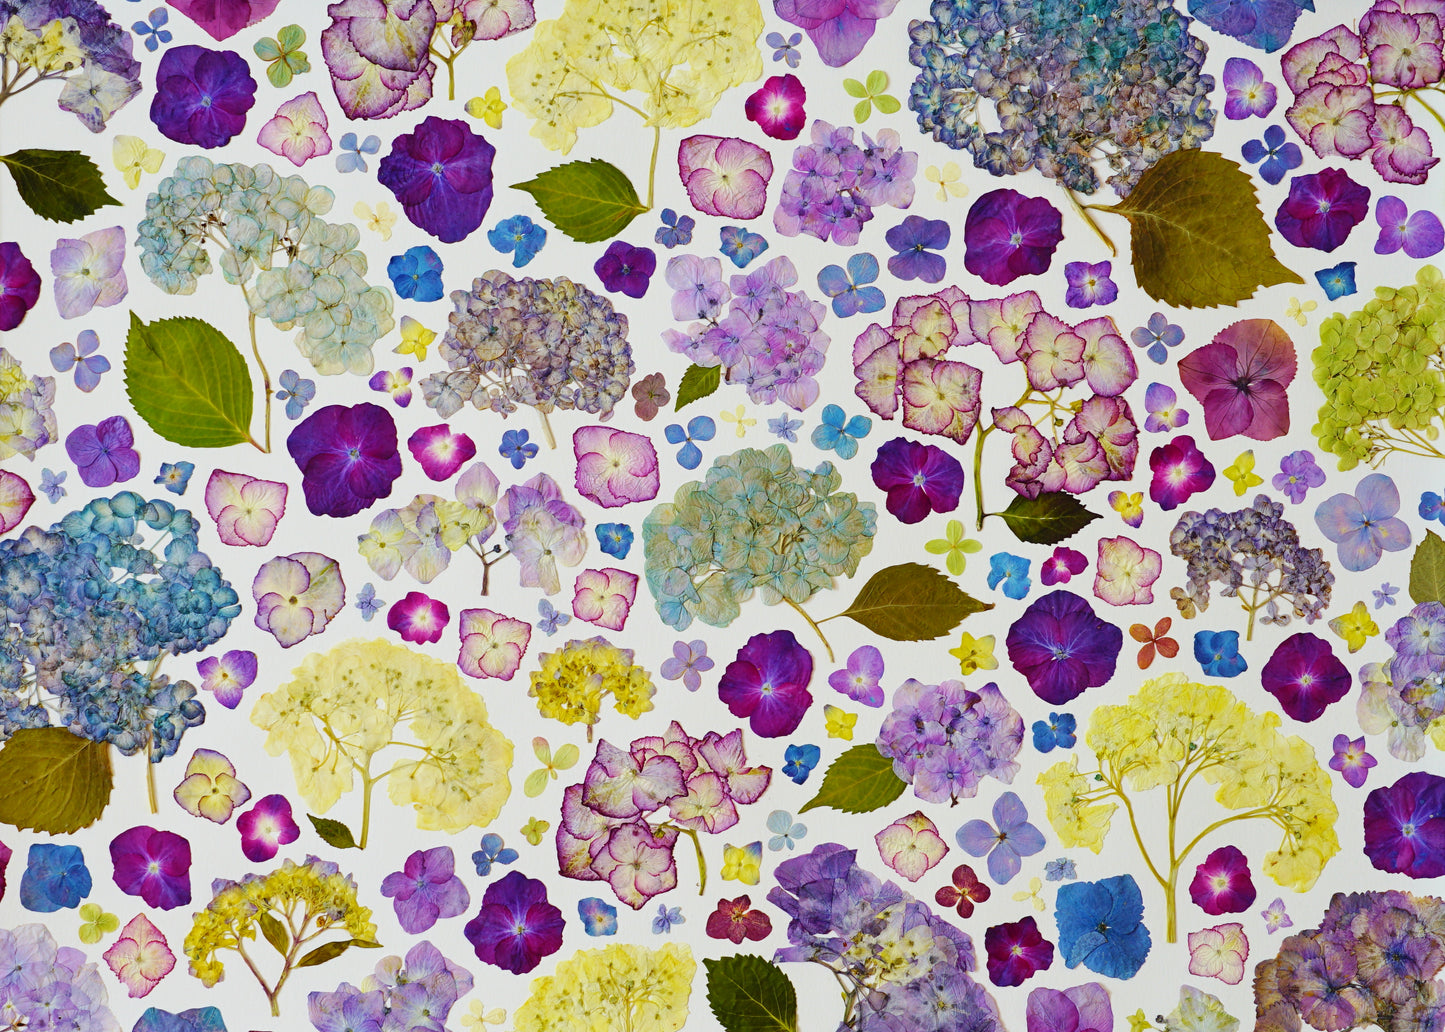 "Hydrangea Lover" Botanical Art Collage